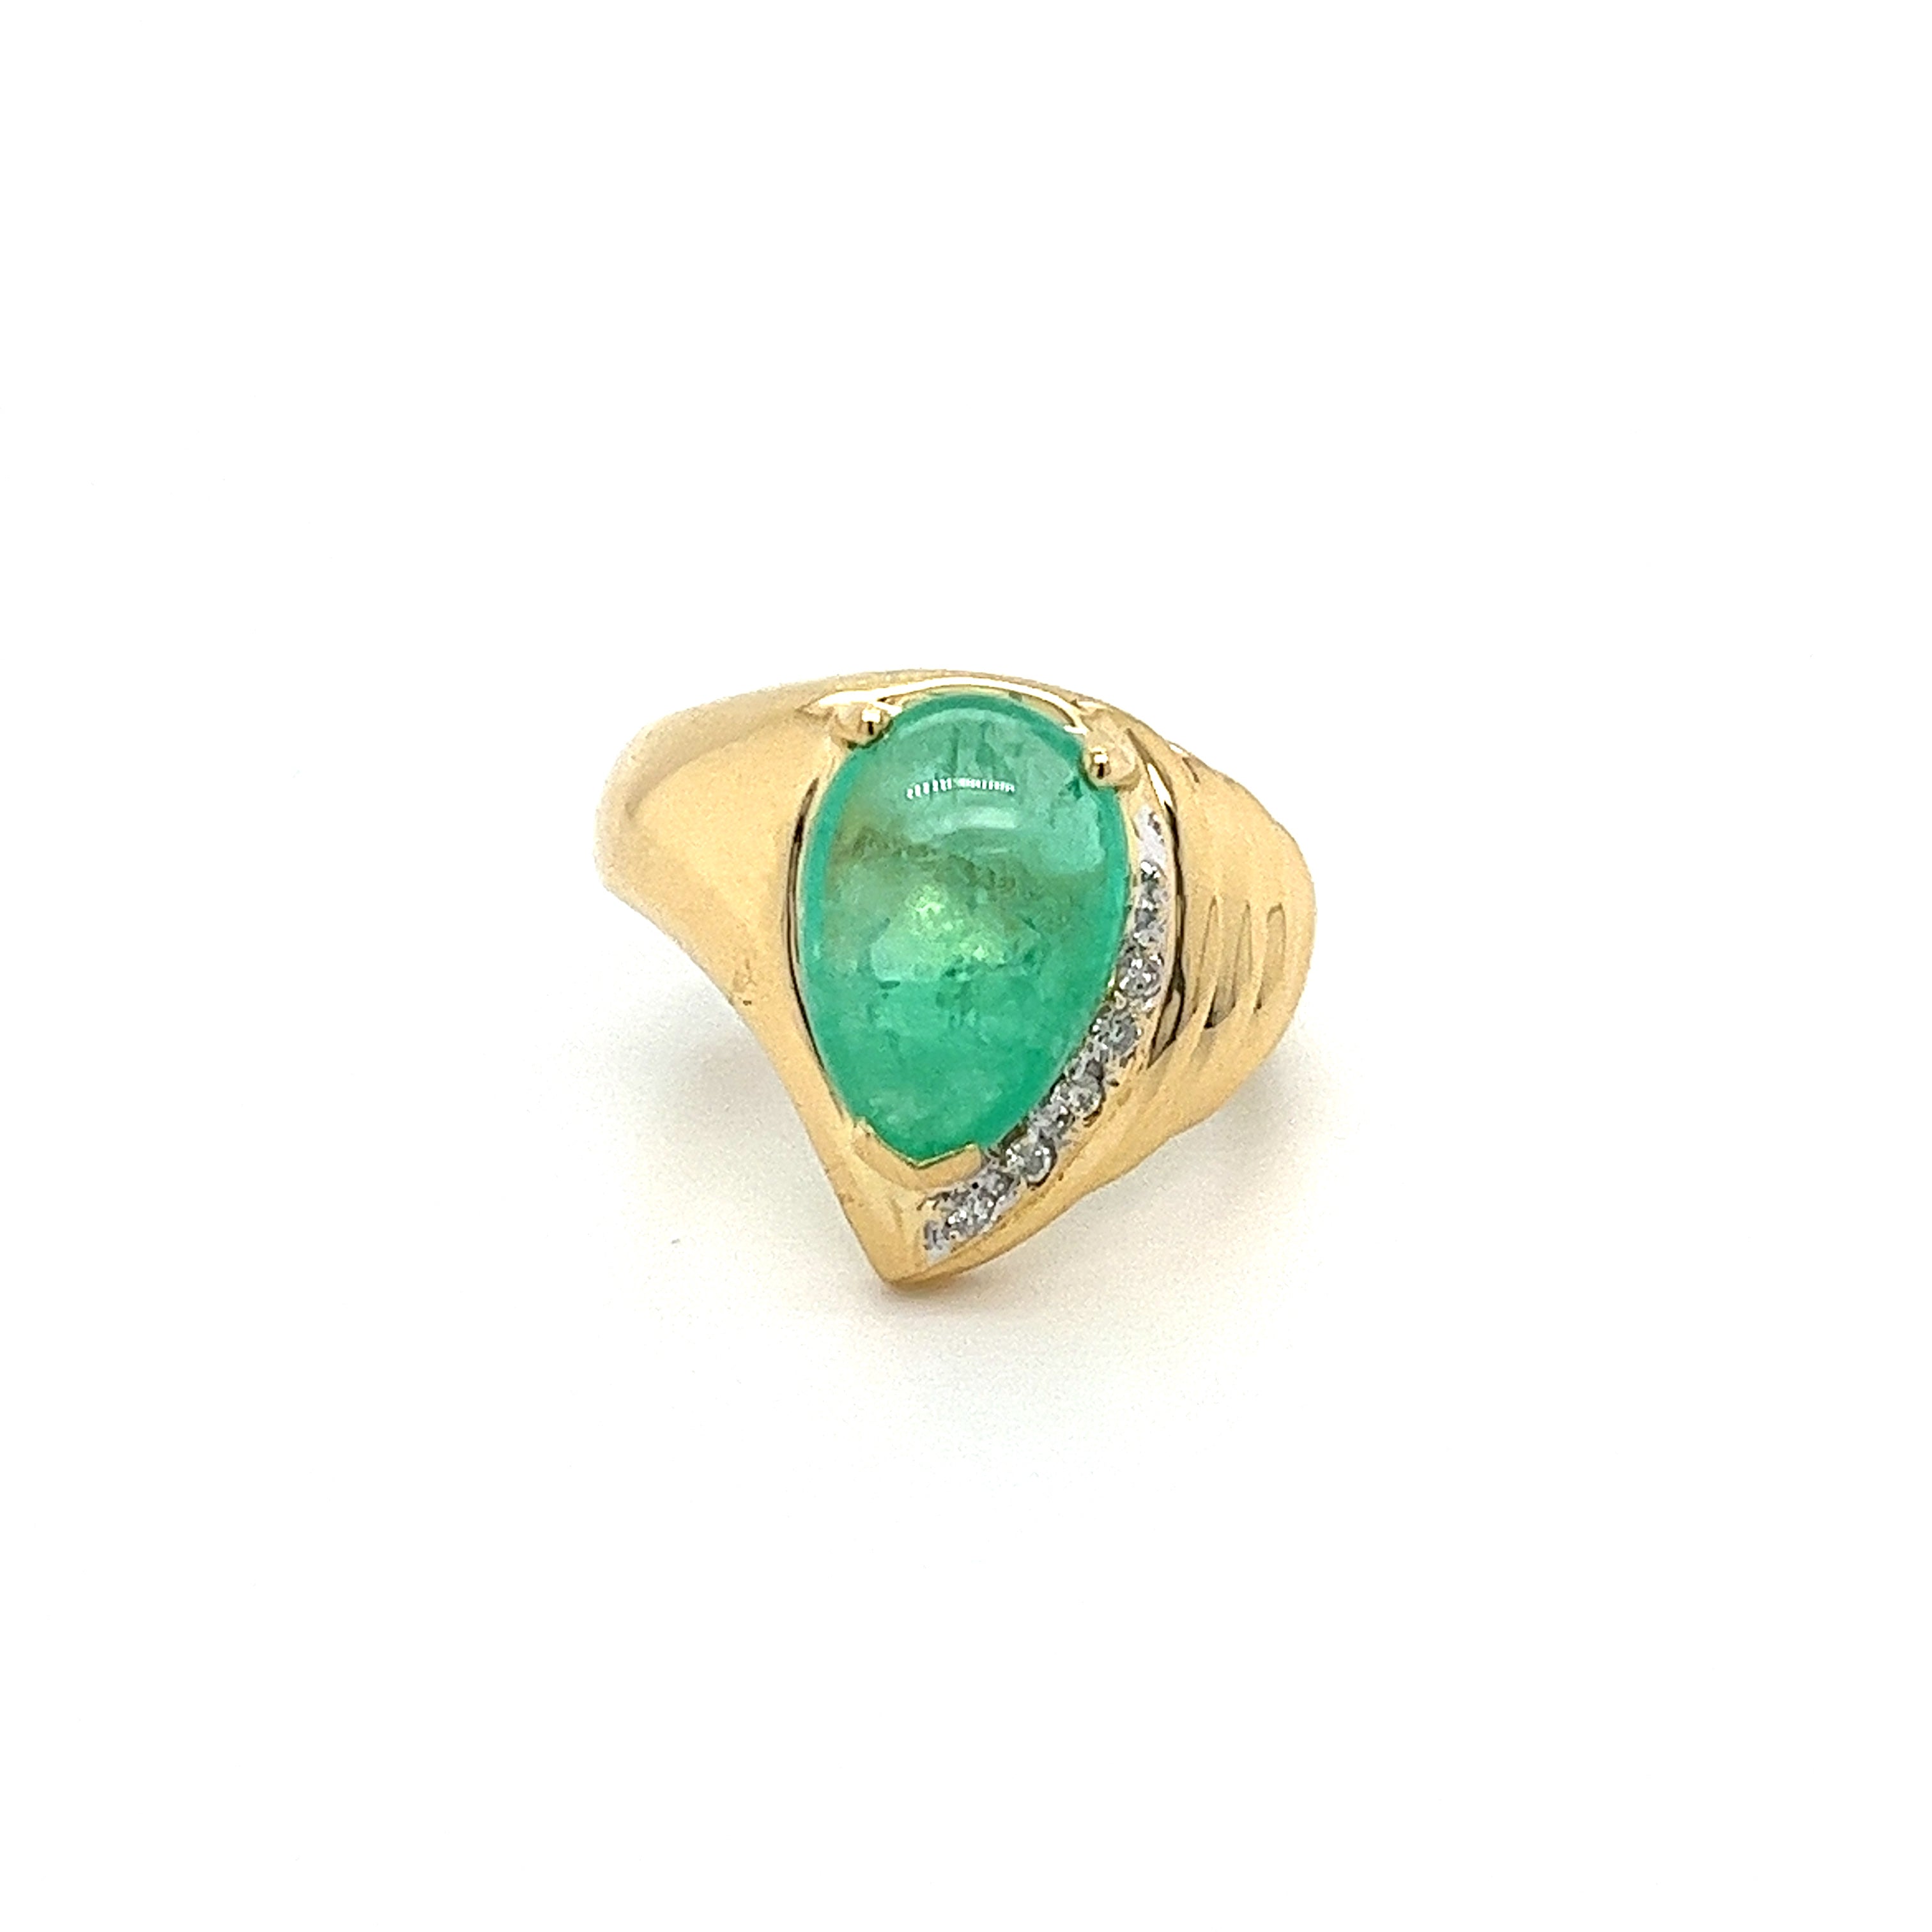 7_81-Carat-Pear-Shaped-Cabochon-Cut-Natural-Emerald-Diamond-Ring-in-18K-Yellow-Gold-Rings.jpg